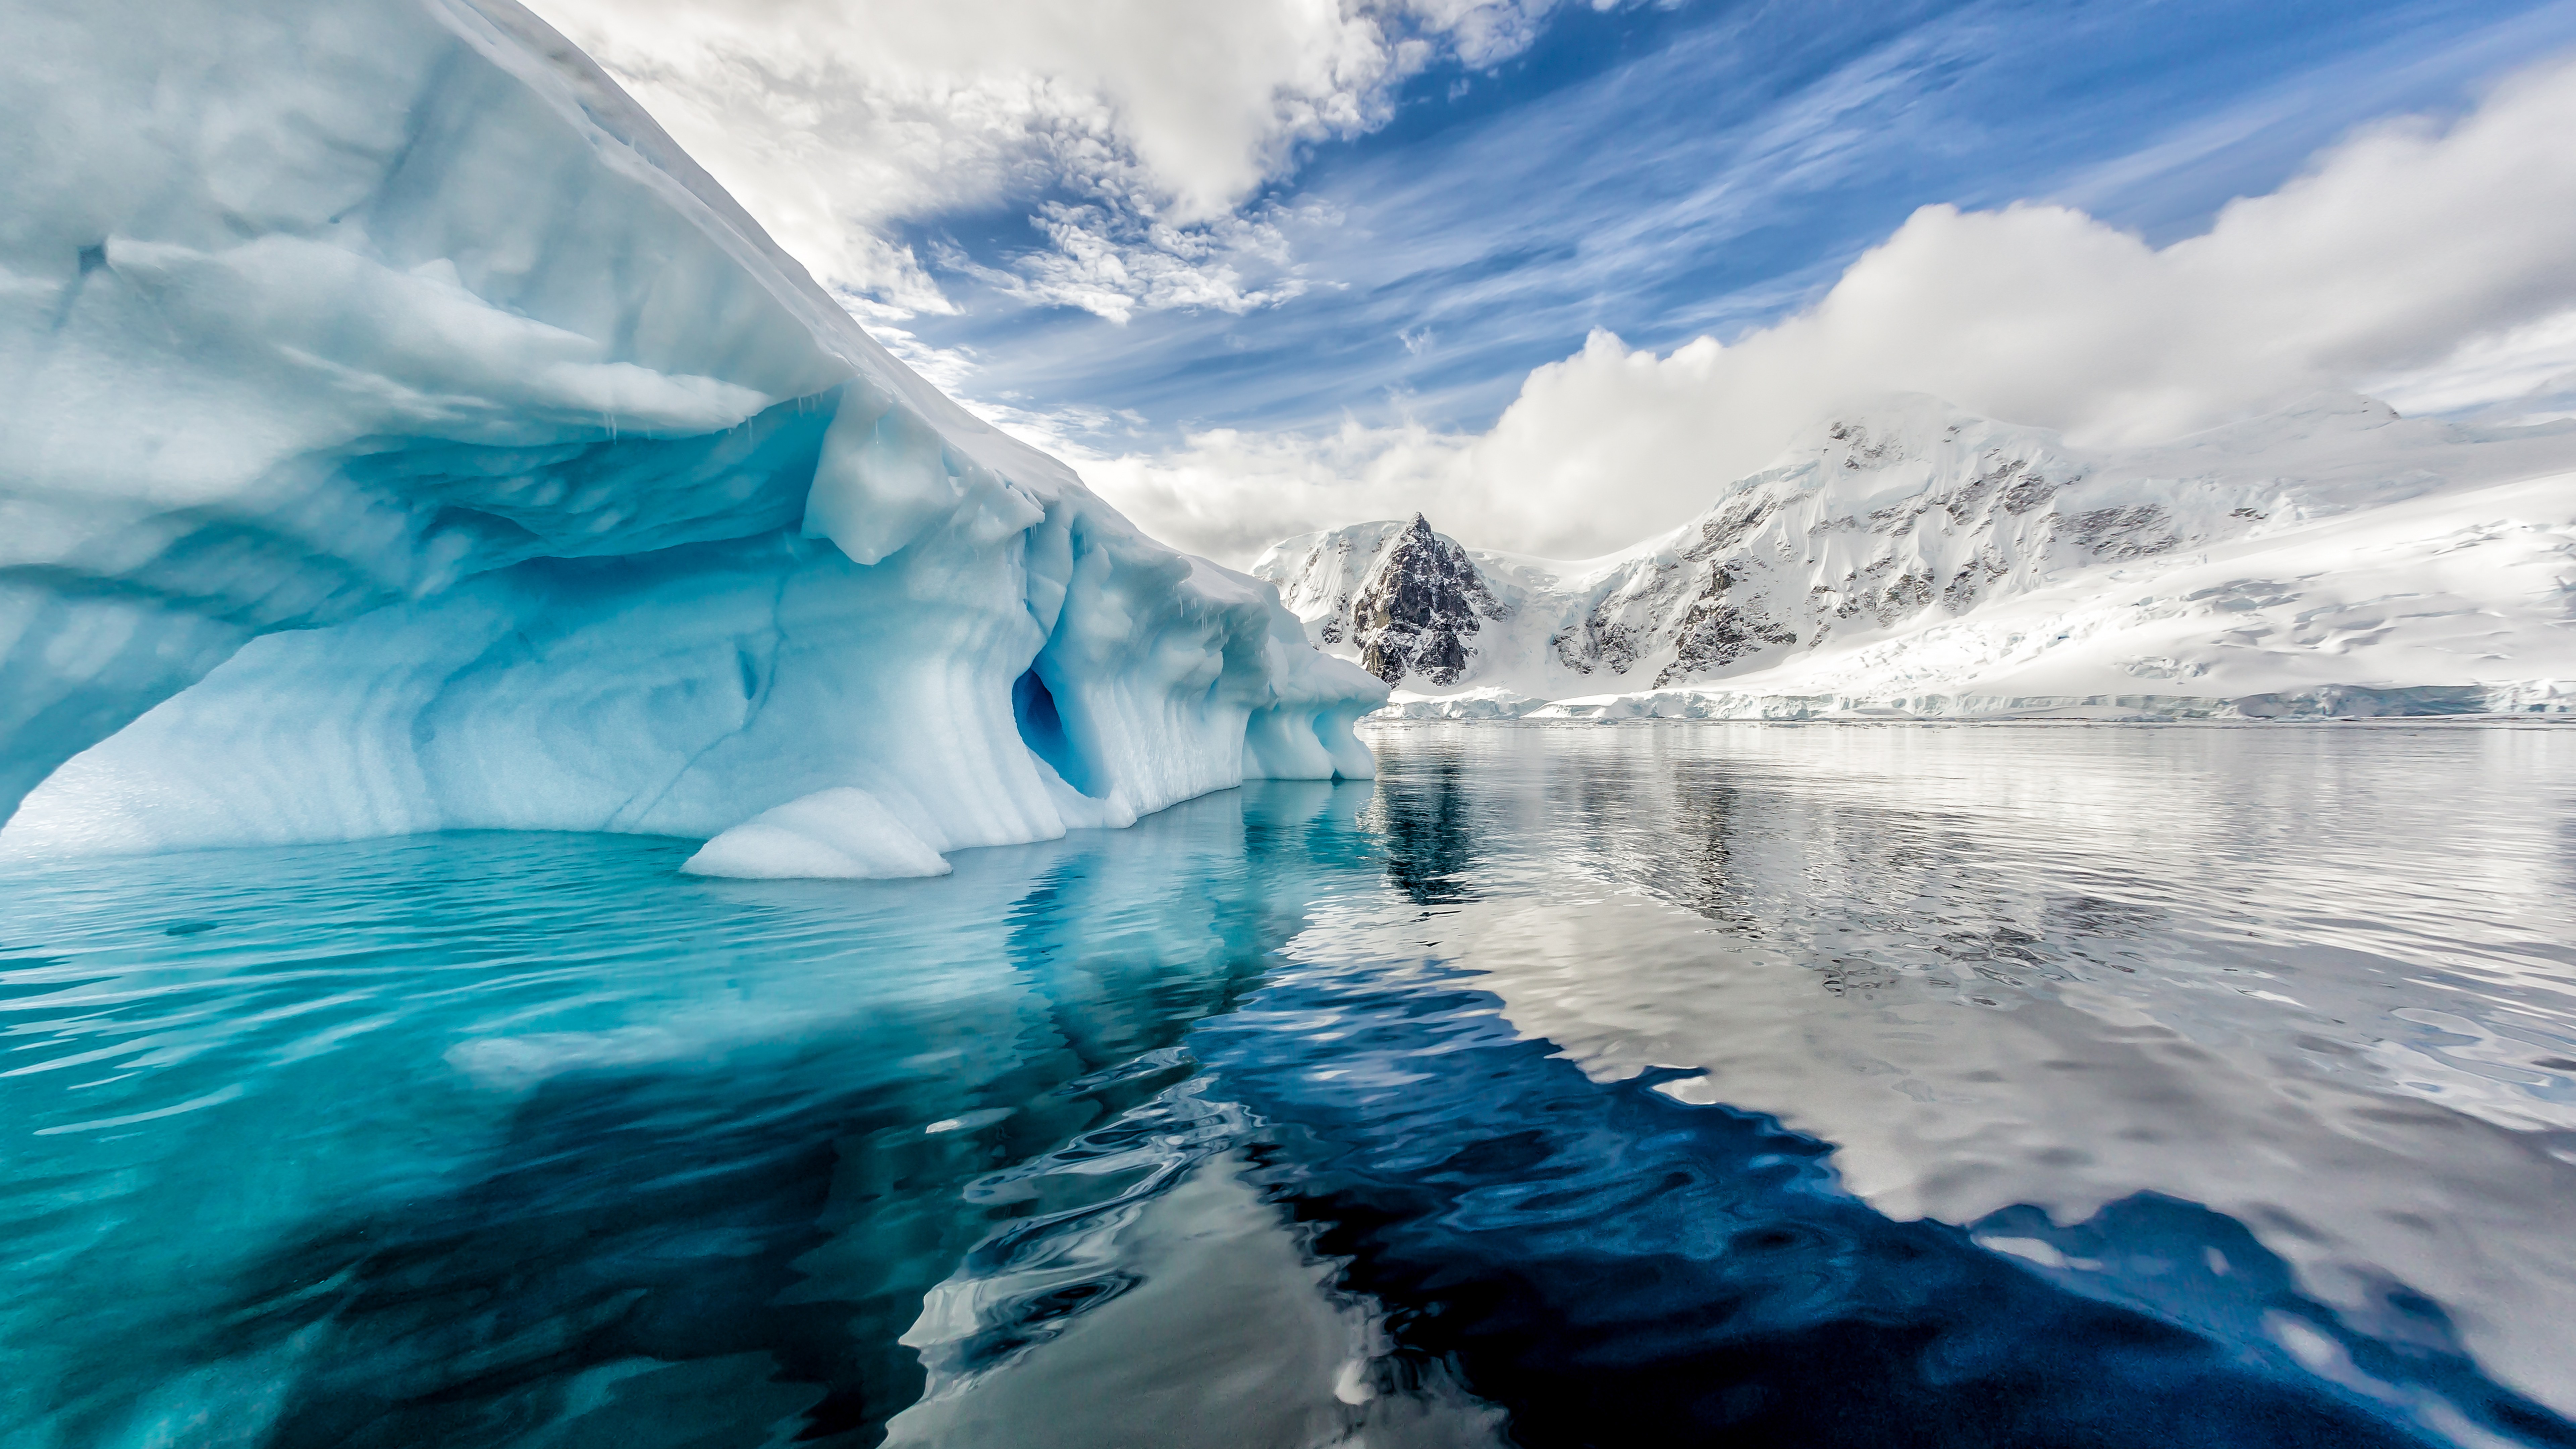 Океан покрытый льдом. Ледники айсберги Антарктиды. Лед Айсберг Арктика Антарктида. Арктика Антарктика Антарктида. Крионы Антарктида.